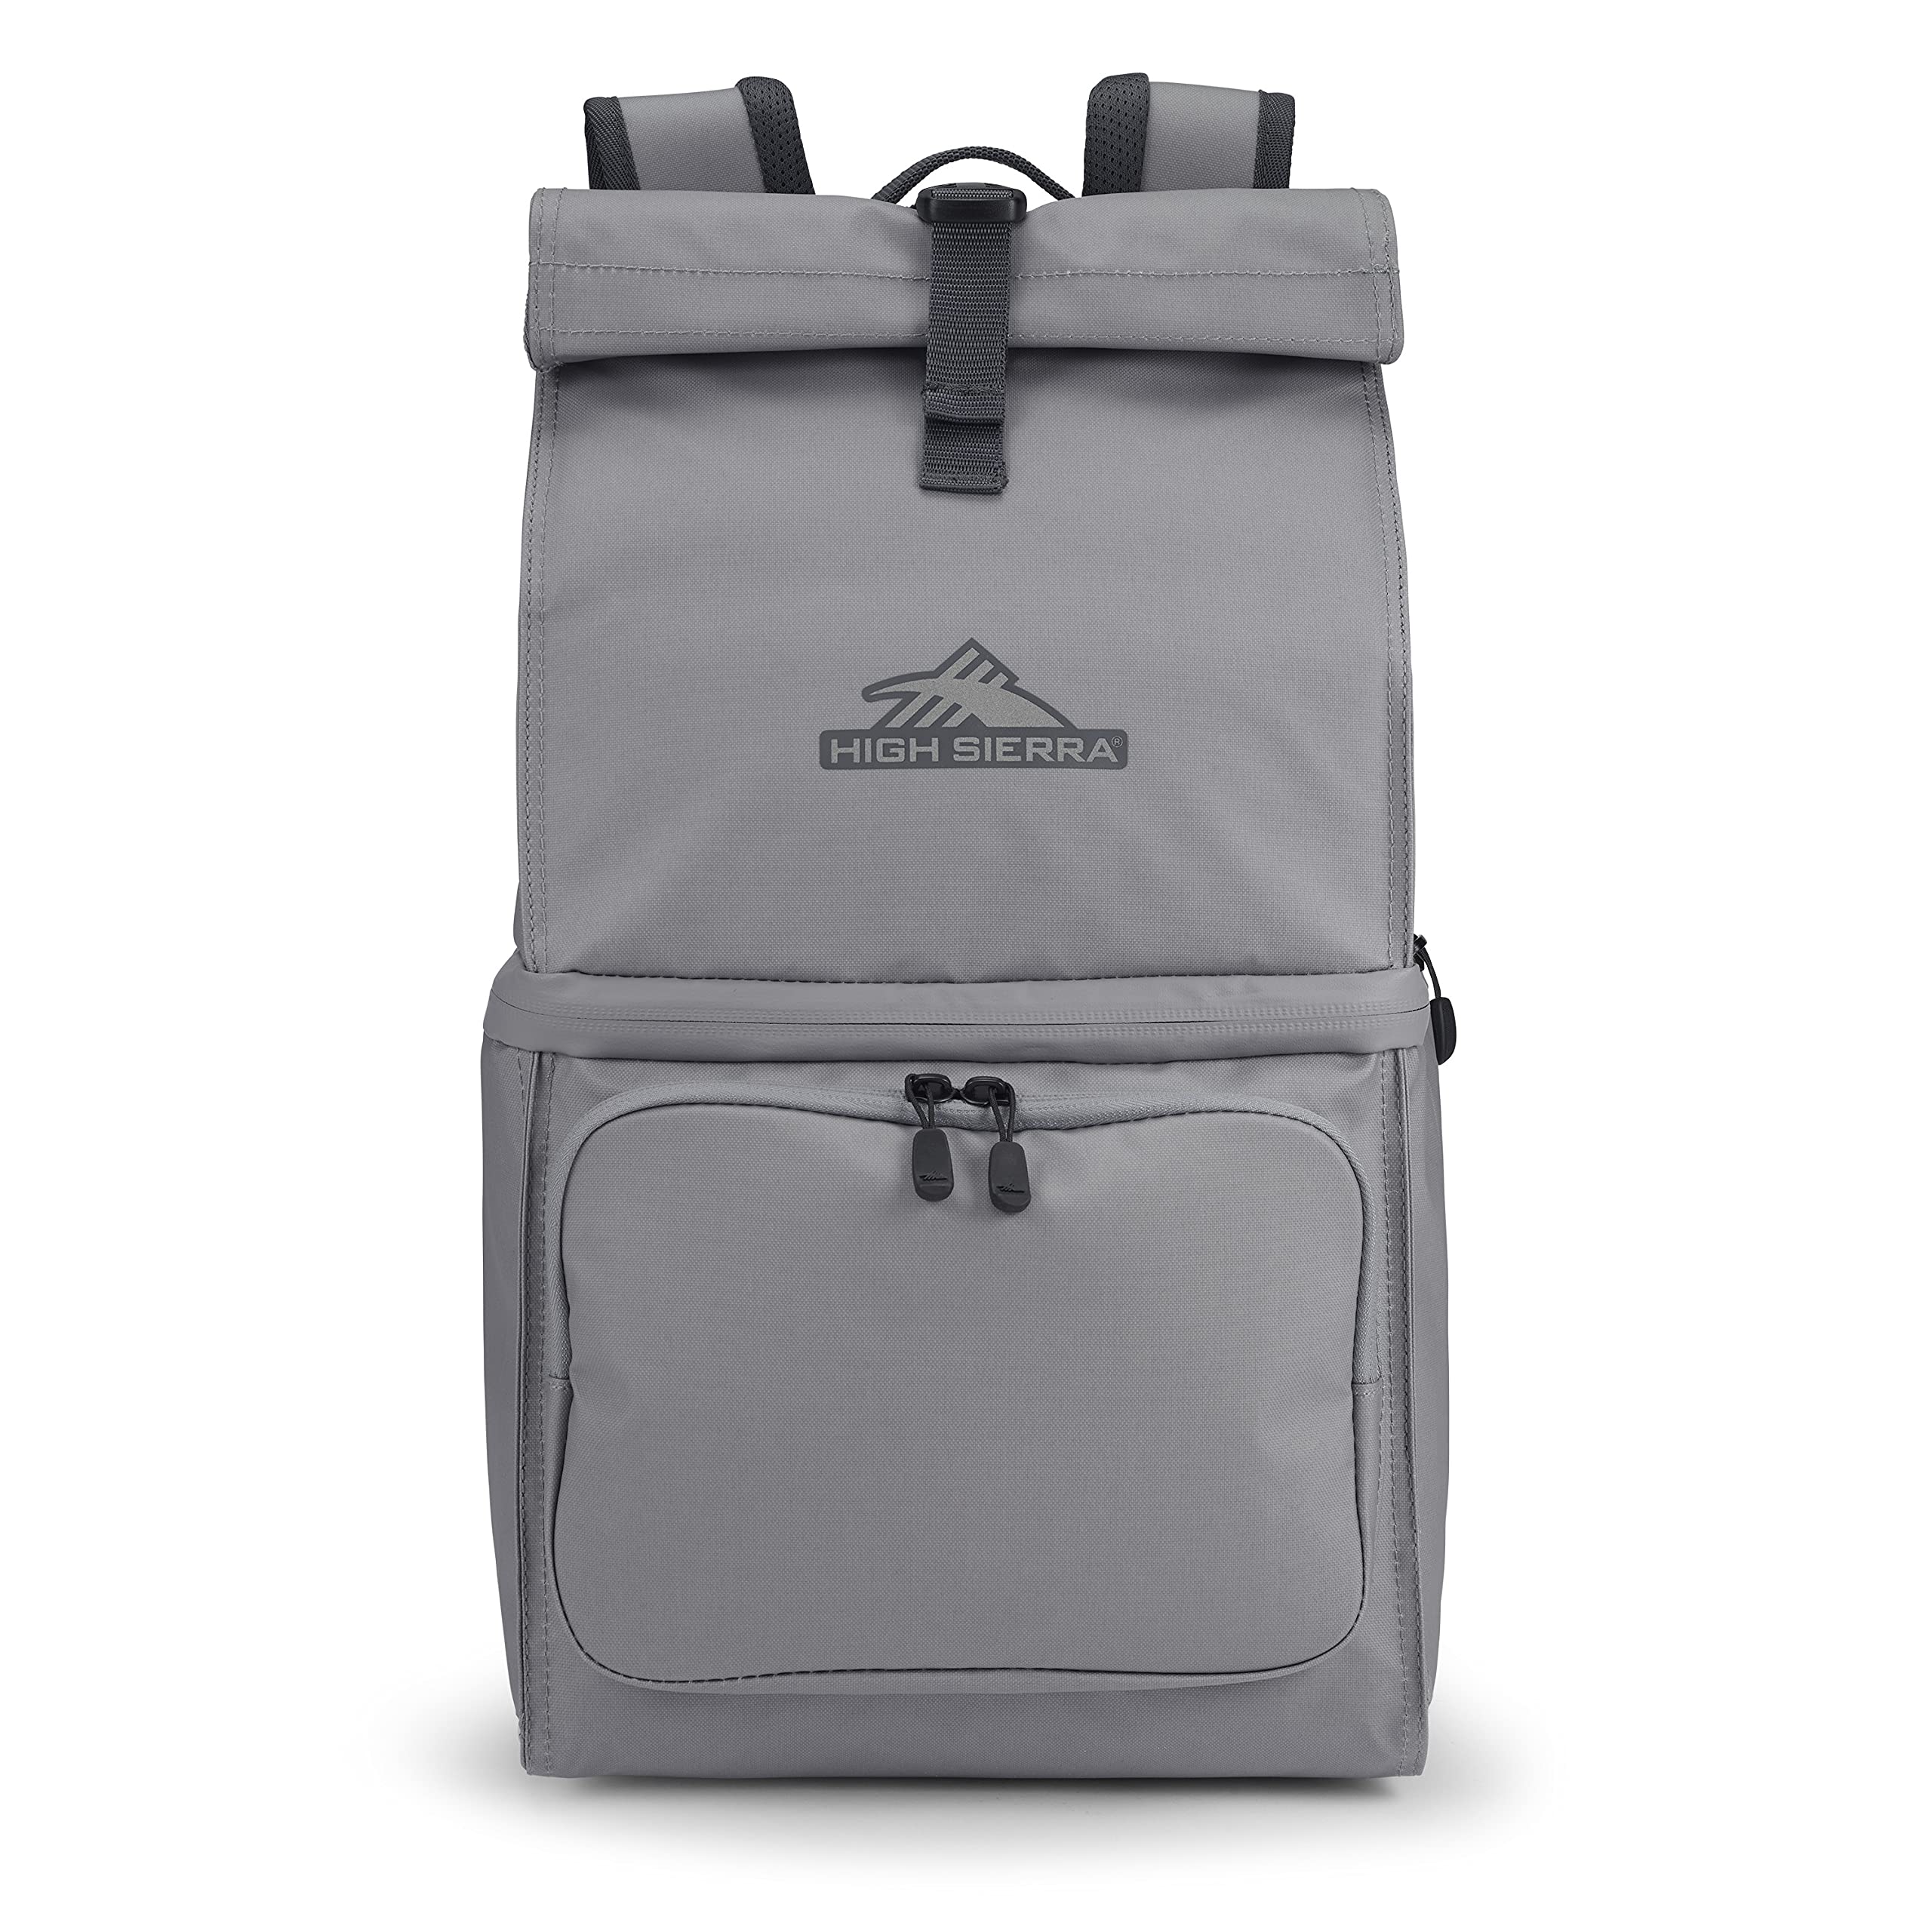 High Sierra Beach N Chill Cooler Backpack, Steel Grey/Mercury, One Size